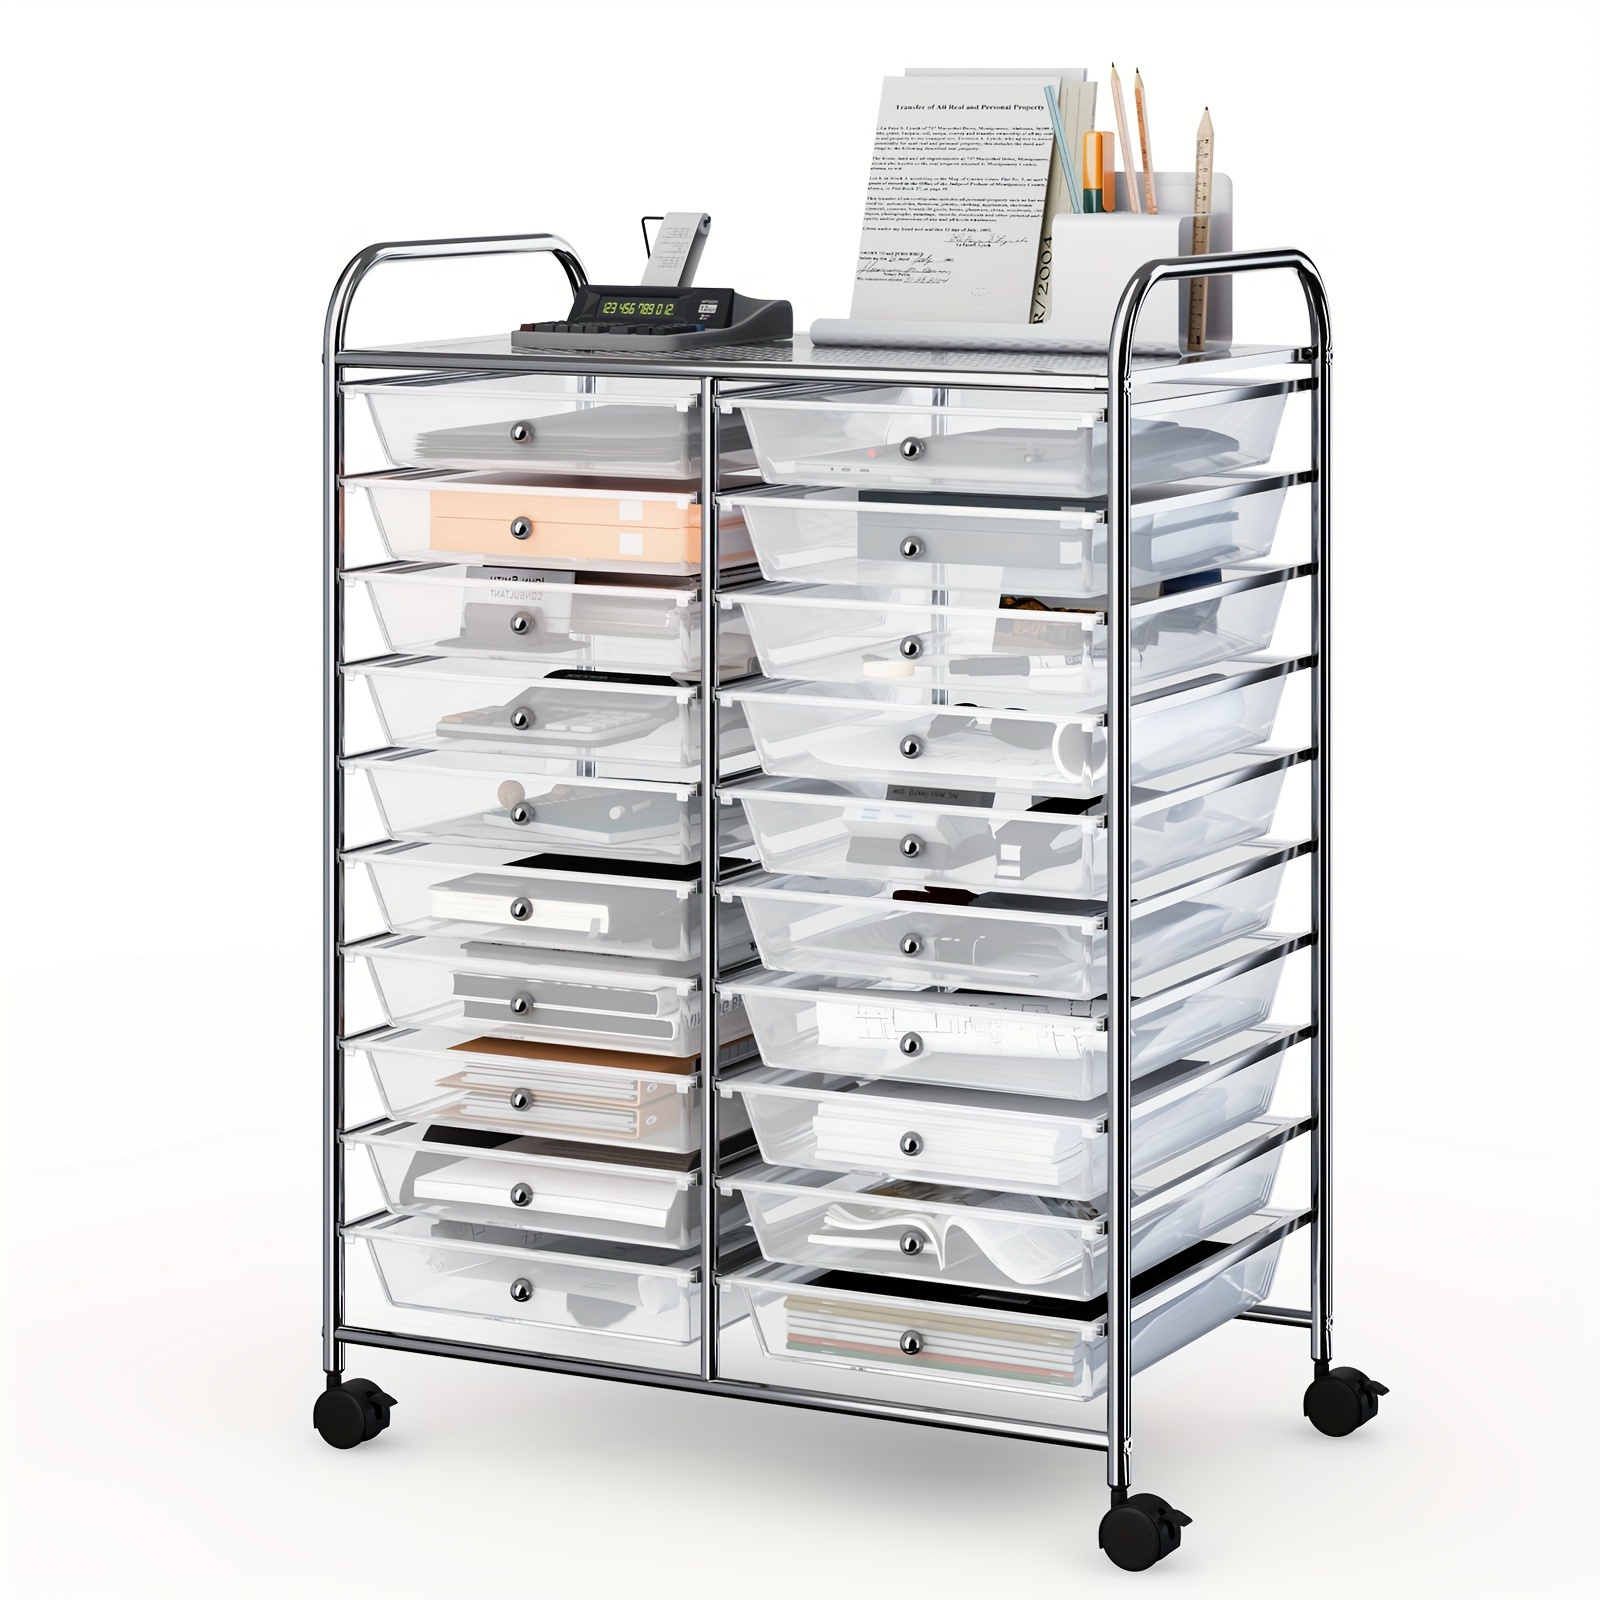 

20 Drawers Rolling Cart Storage Scrapbook Paper Studio Organizer Bins Clear